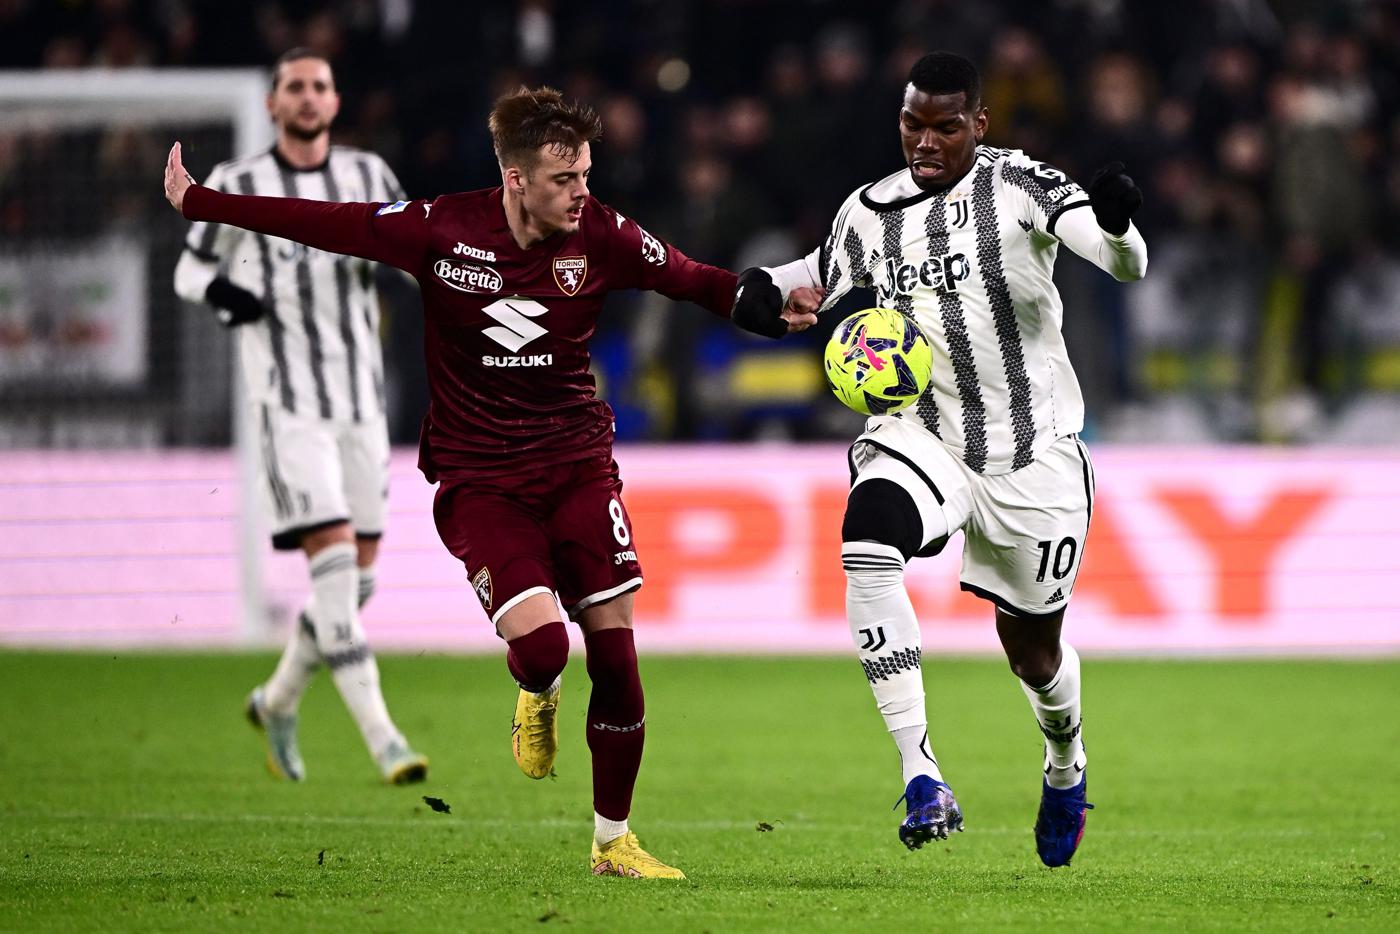 Juventus - Torino - 4:2. Italian Championship, round 24. Match review,  statistics (Feb. 28, 2023) —